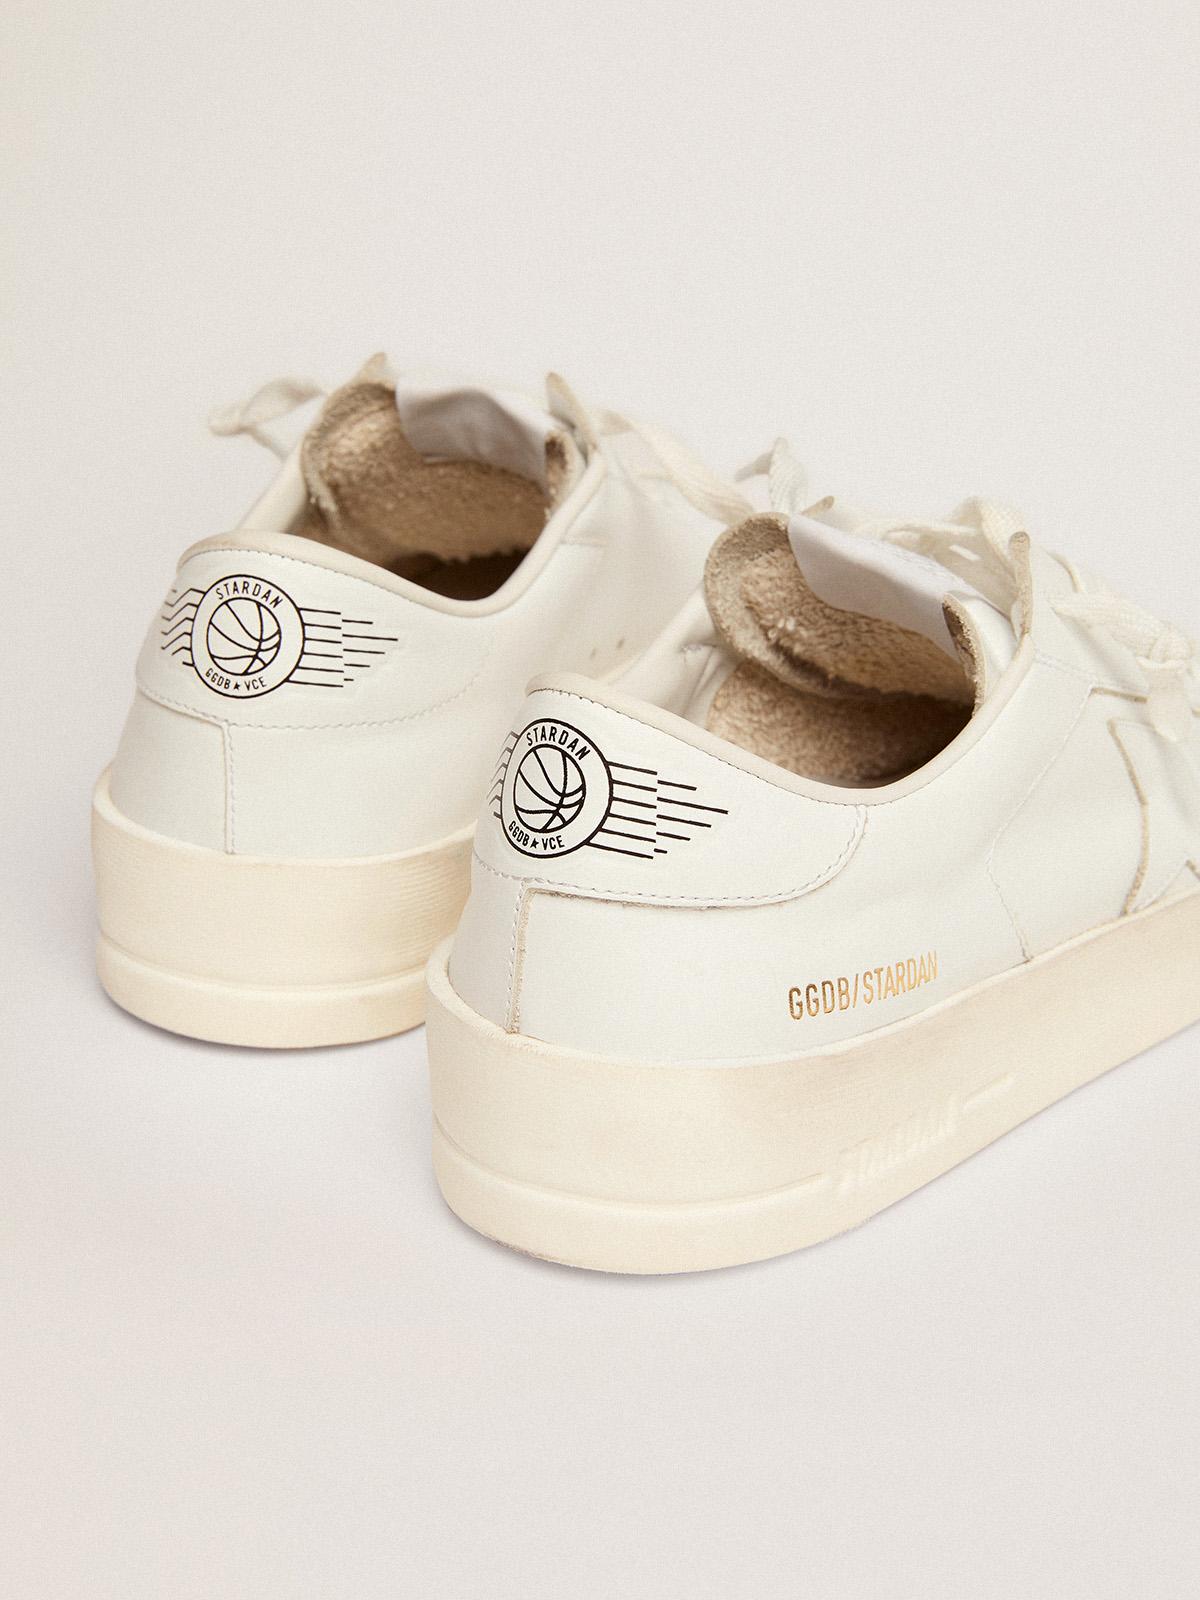 Women\'s Stardan sneakers in total white leather | Golden Goose